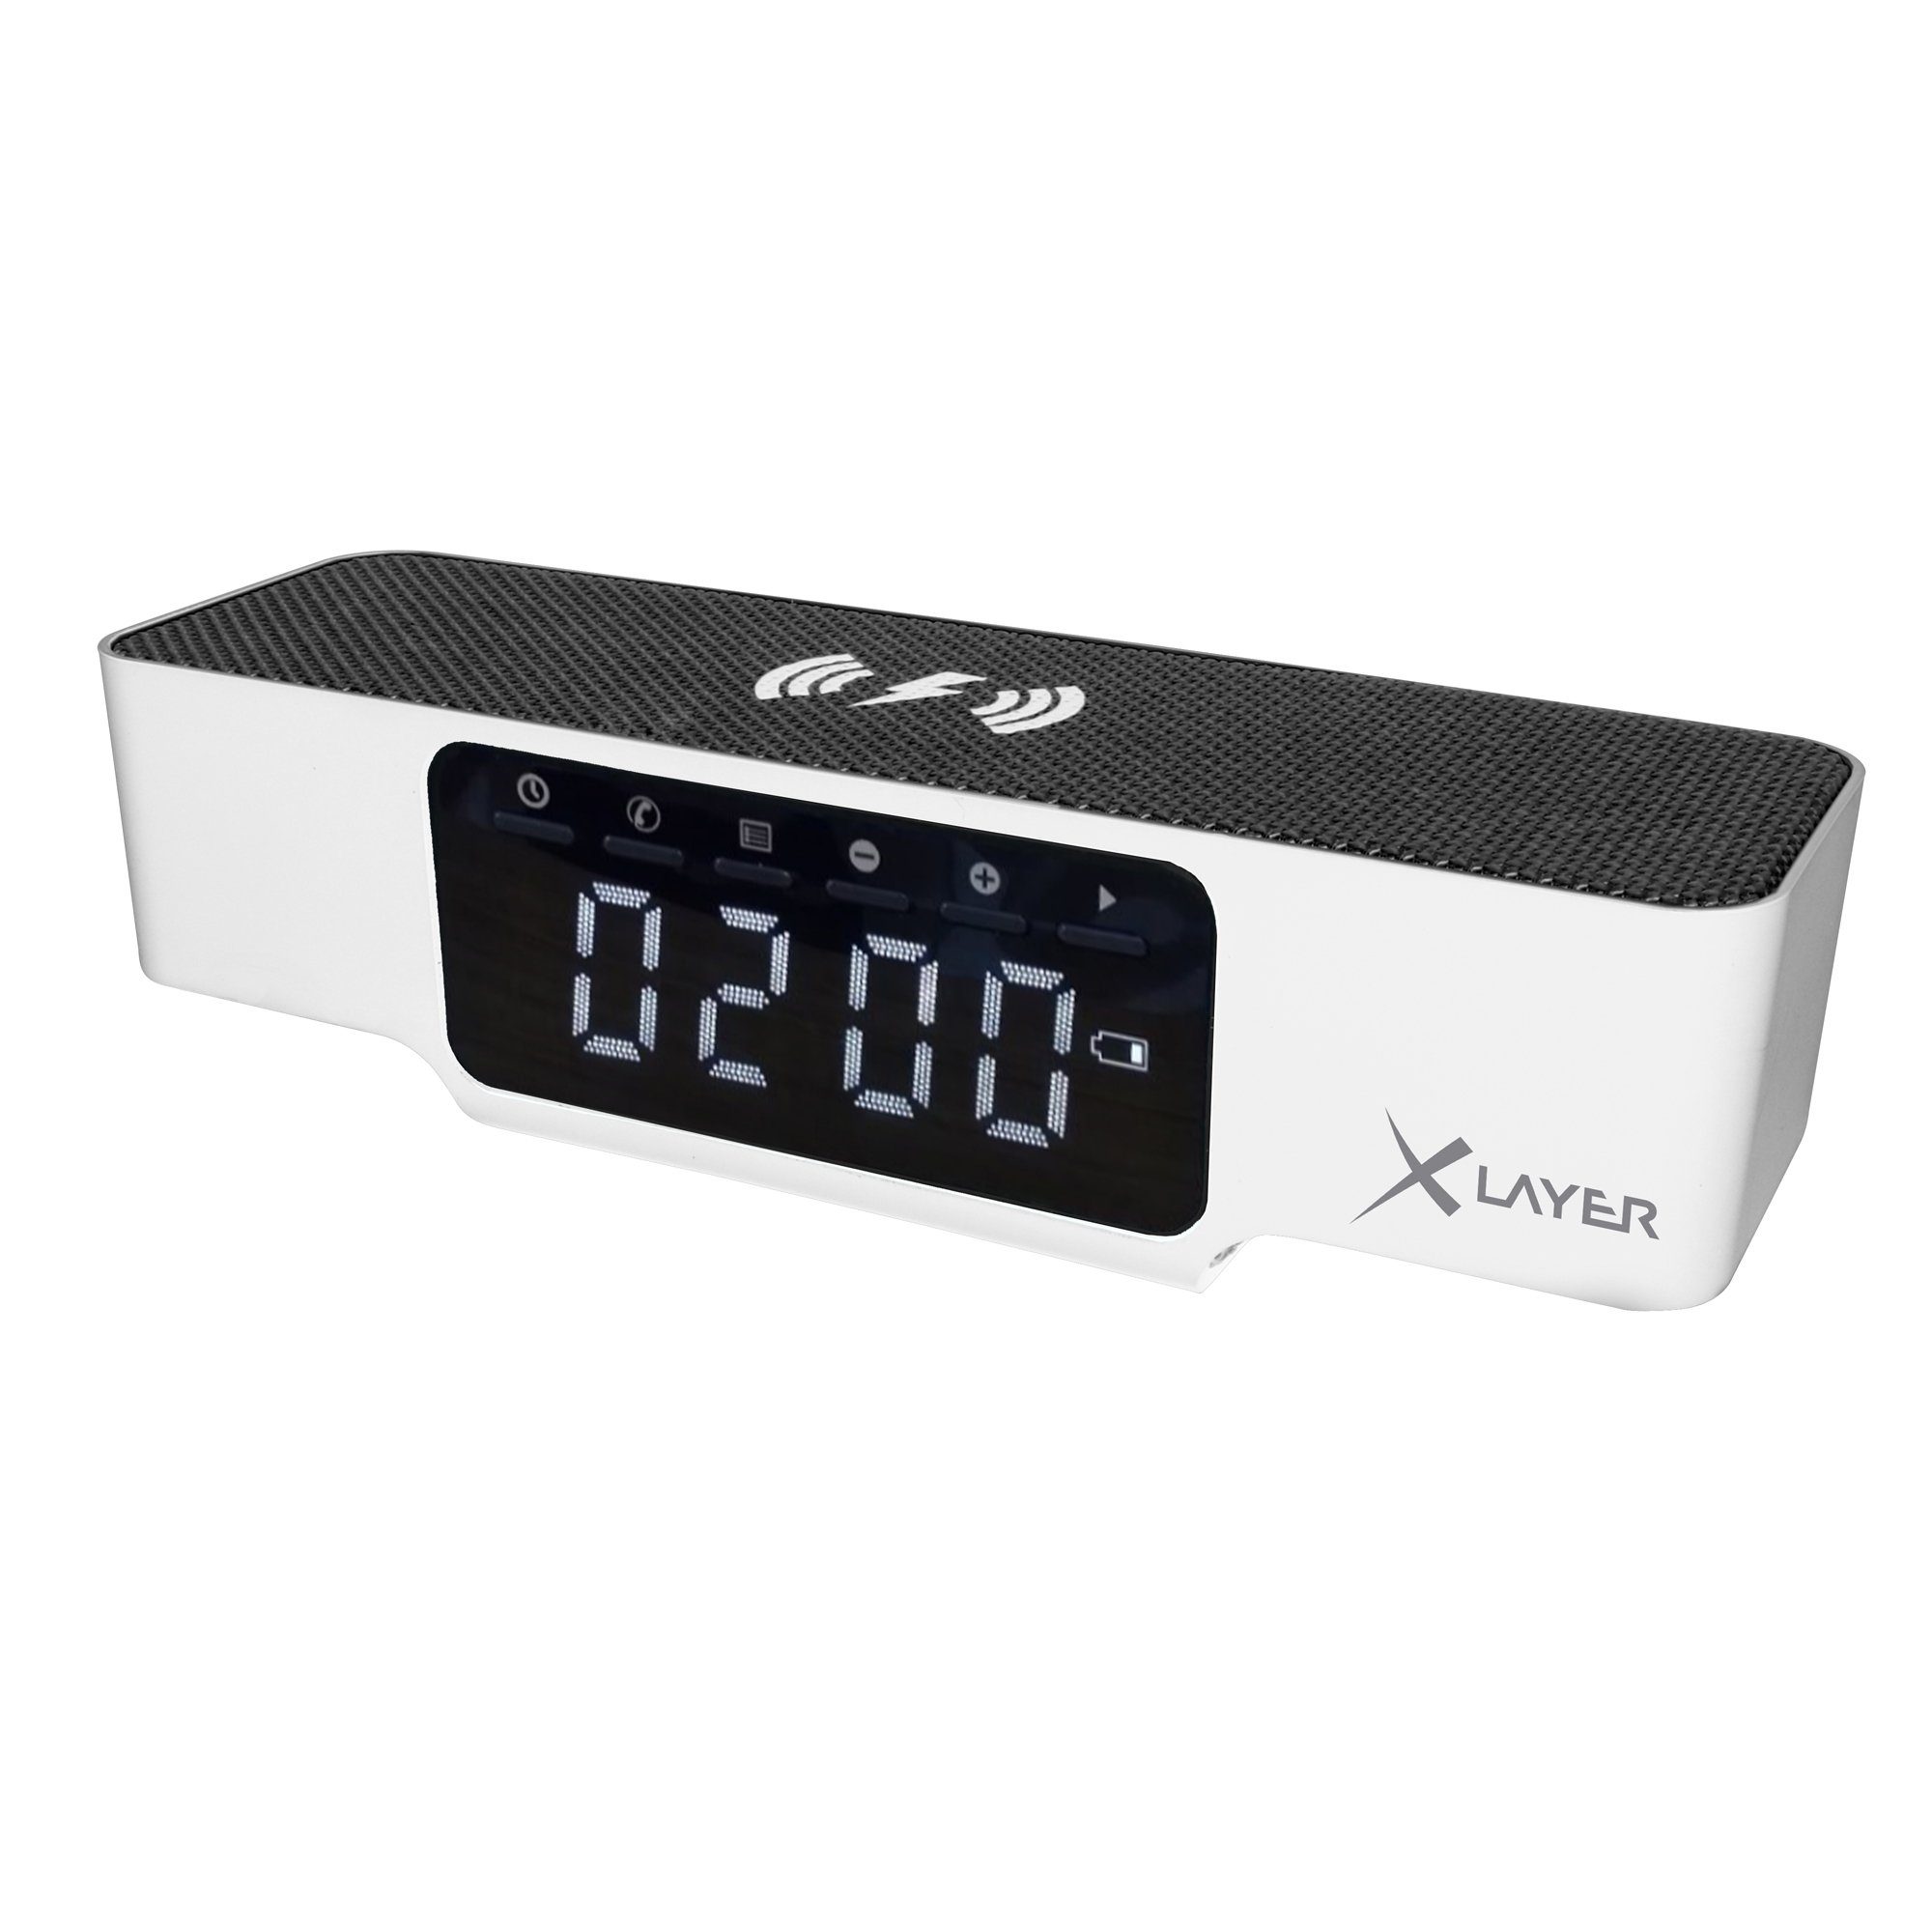 XLAYER Ladegerät XLayer Wireless Charging Alarm Clock Smartphones/Tablets Wireless Charger